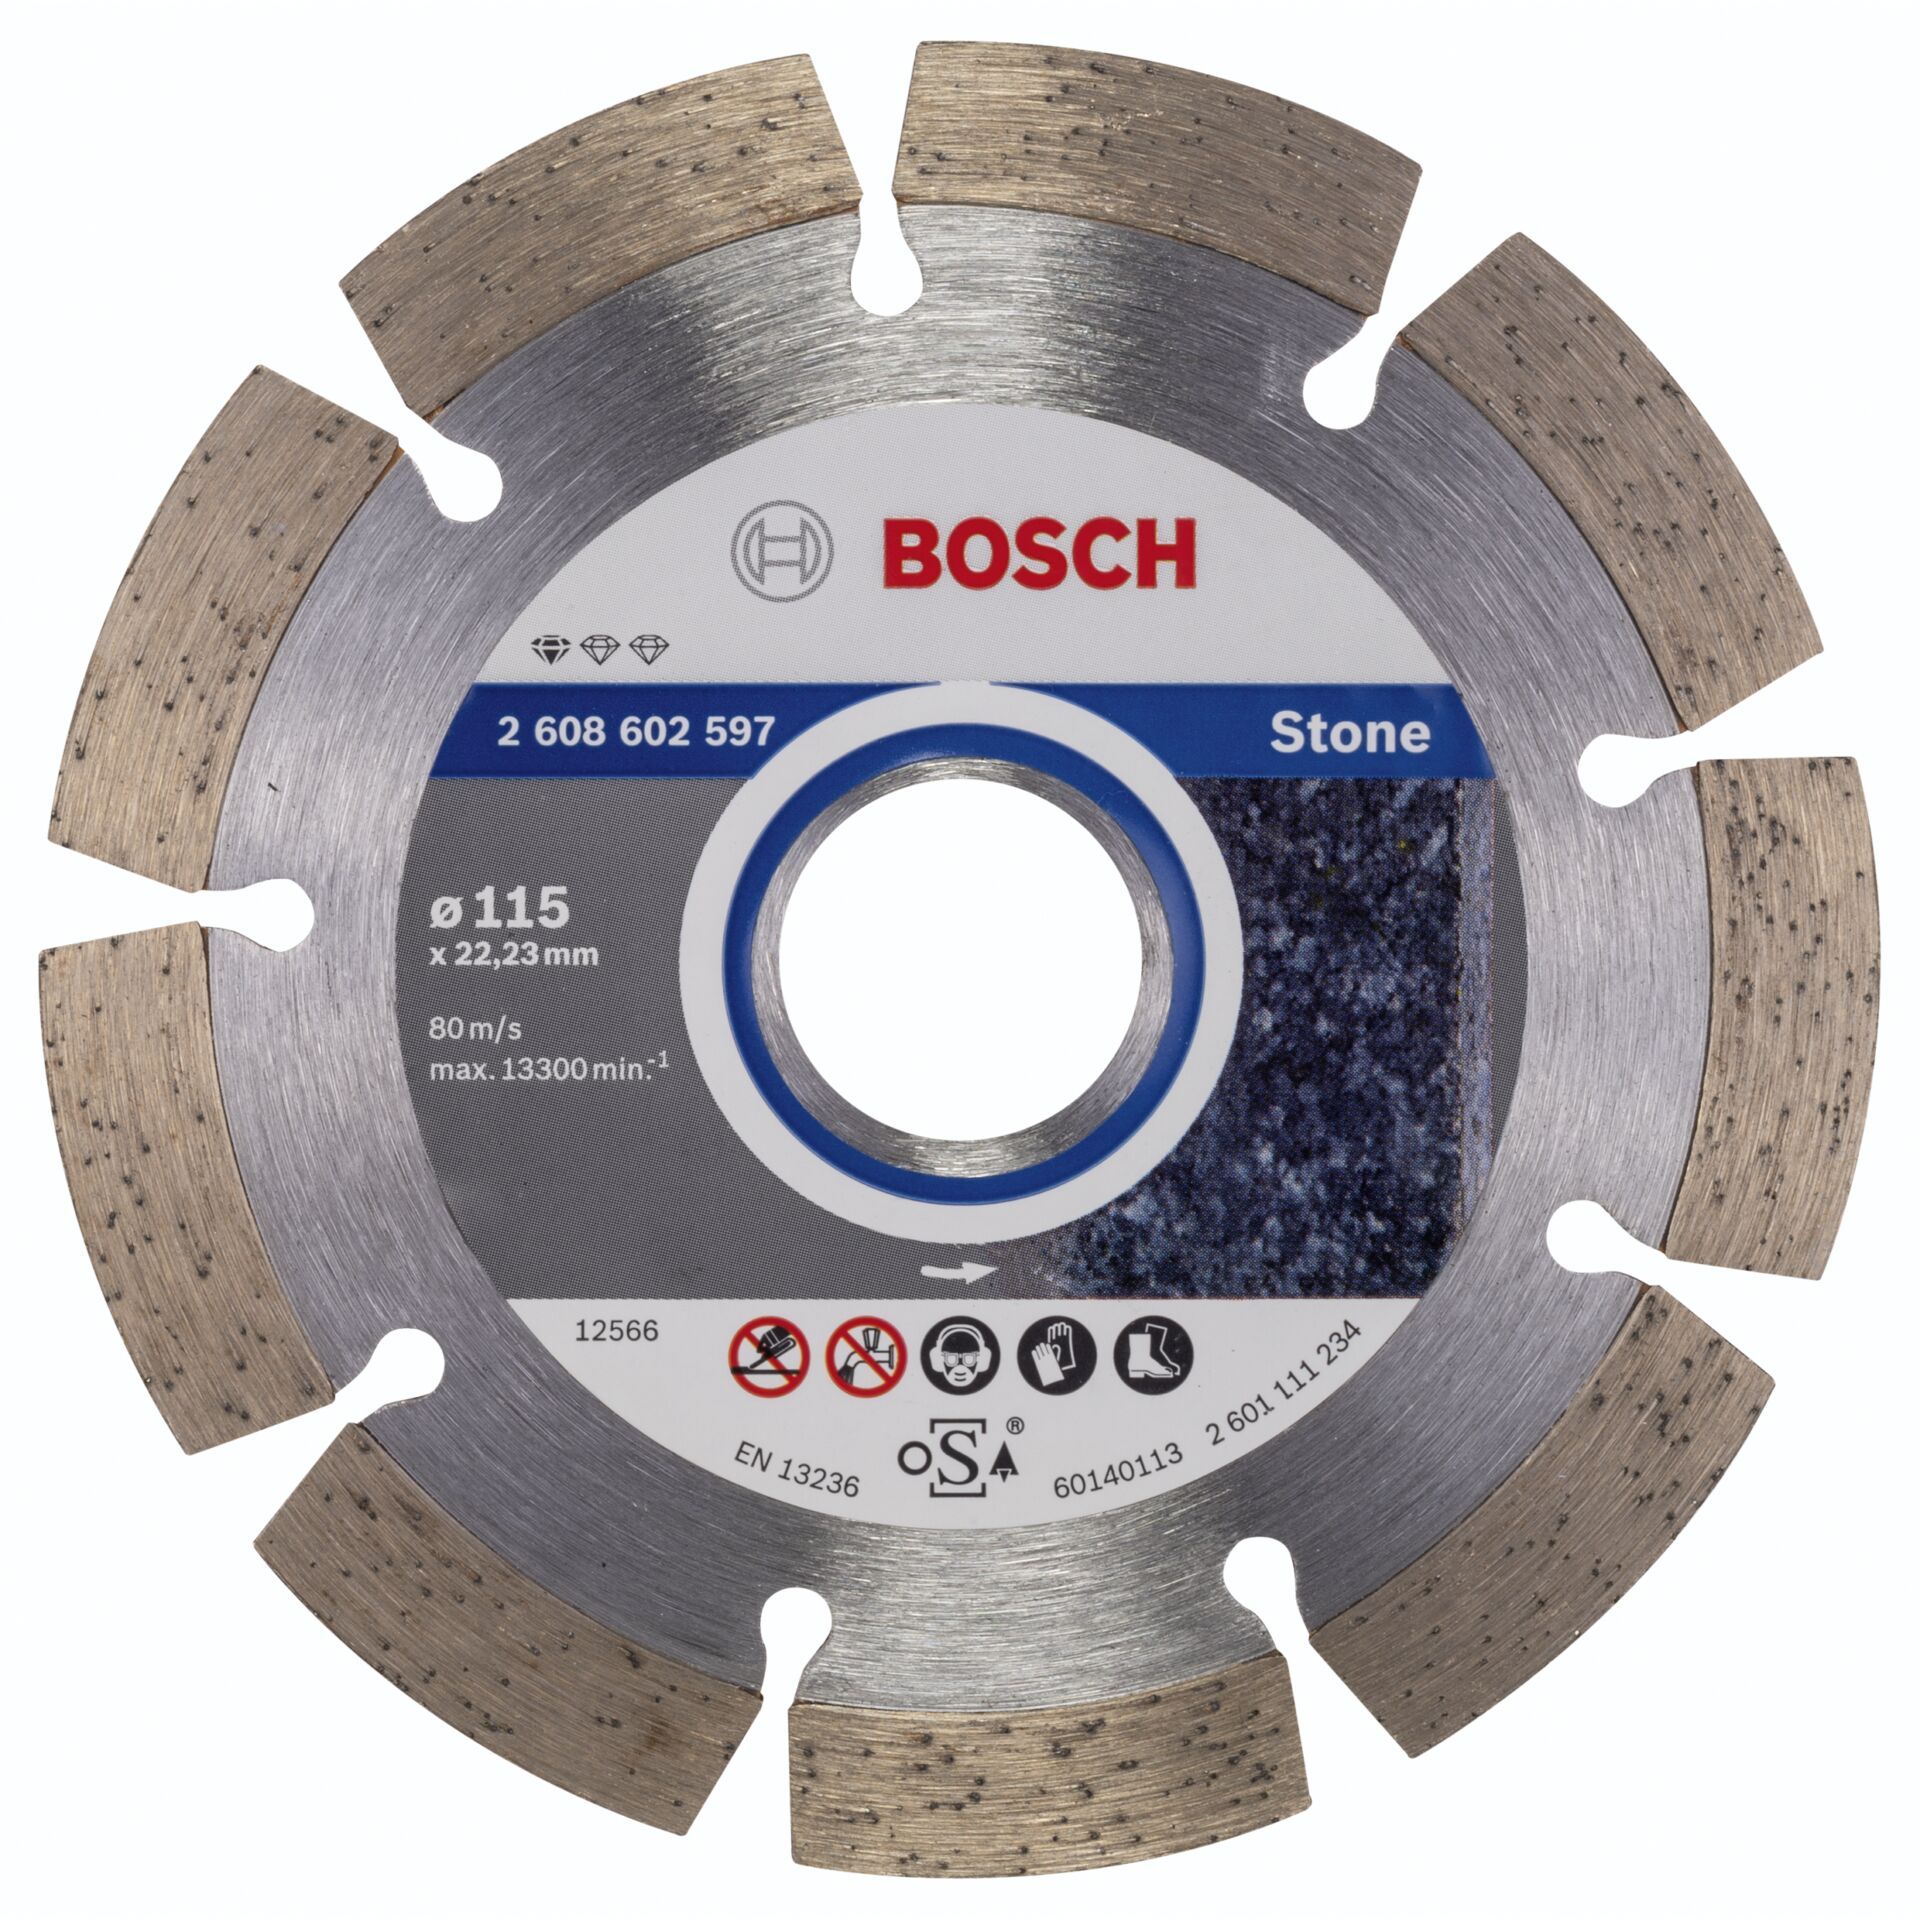 Bosch DIA-TS 115x22,23 Standard For Stone